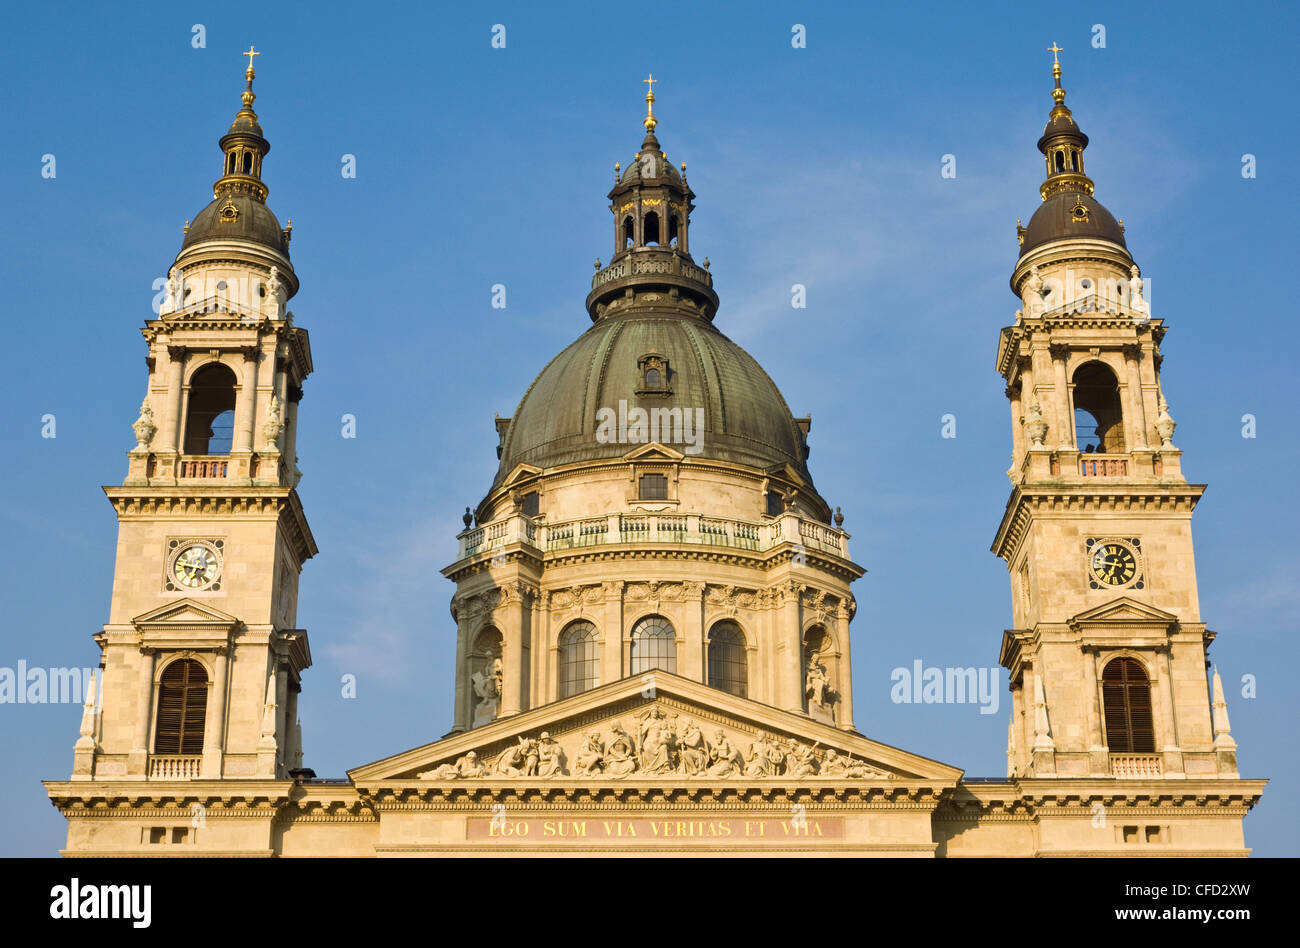 Dome of St. Stephen's basilica (Szent Istvan Bazilika), Budapest, Hungary, Europe Stock Photo